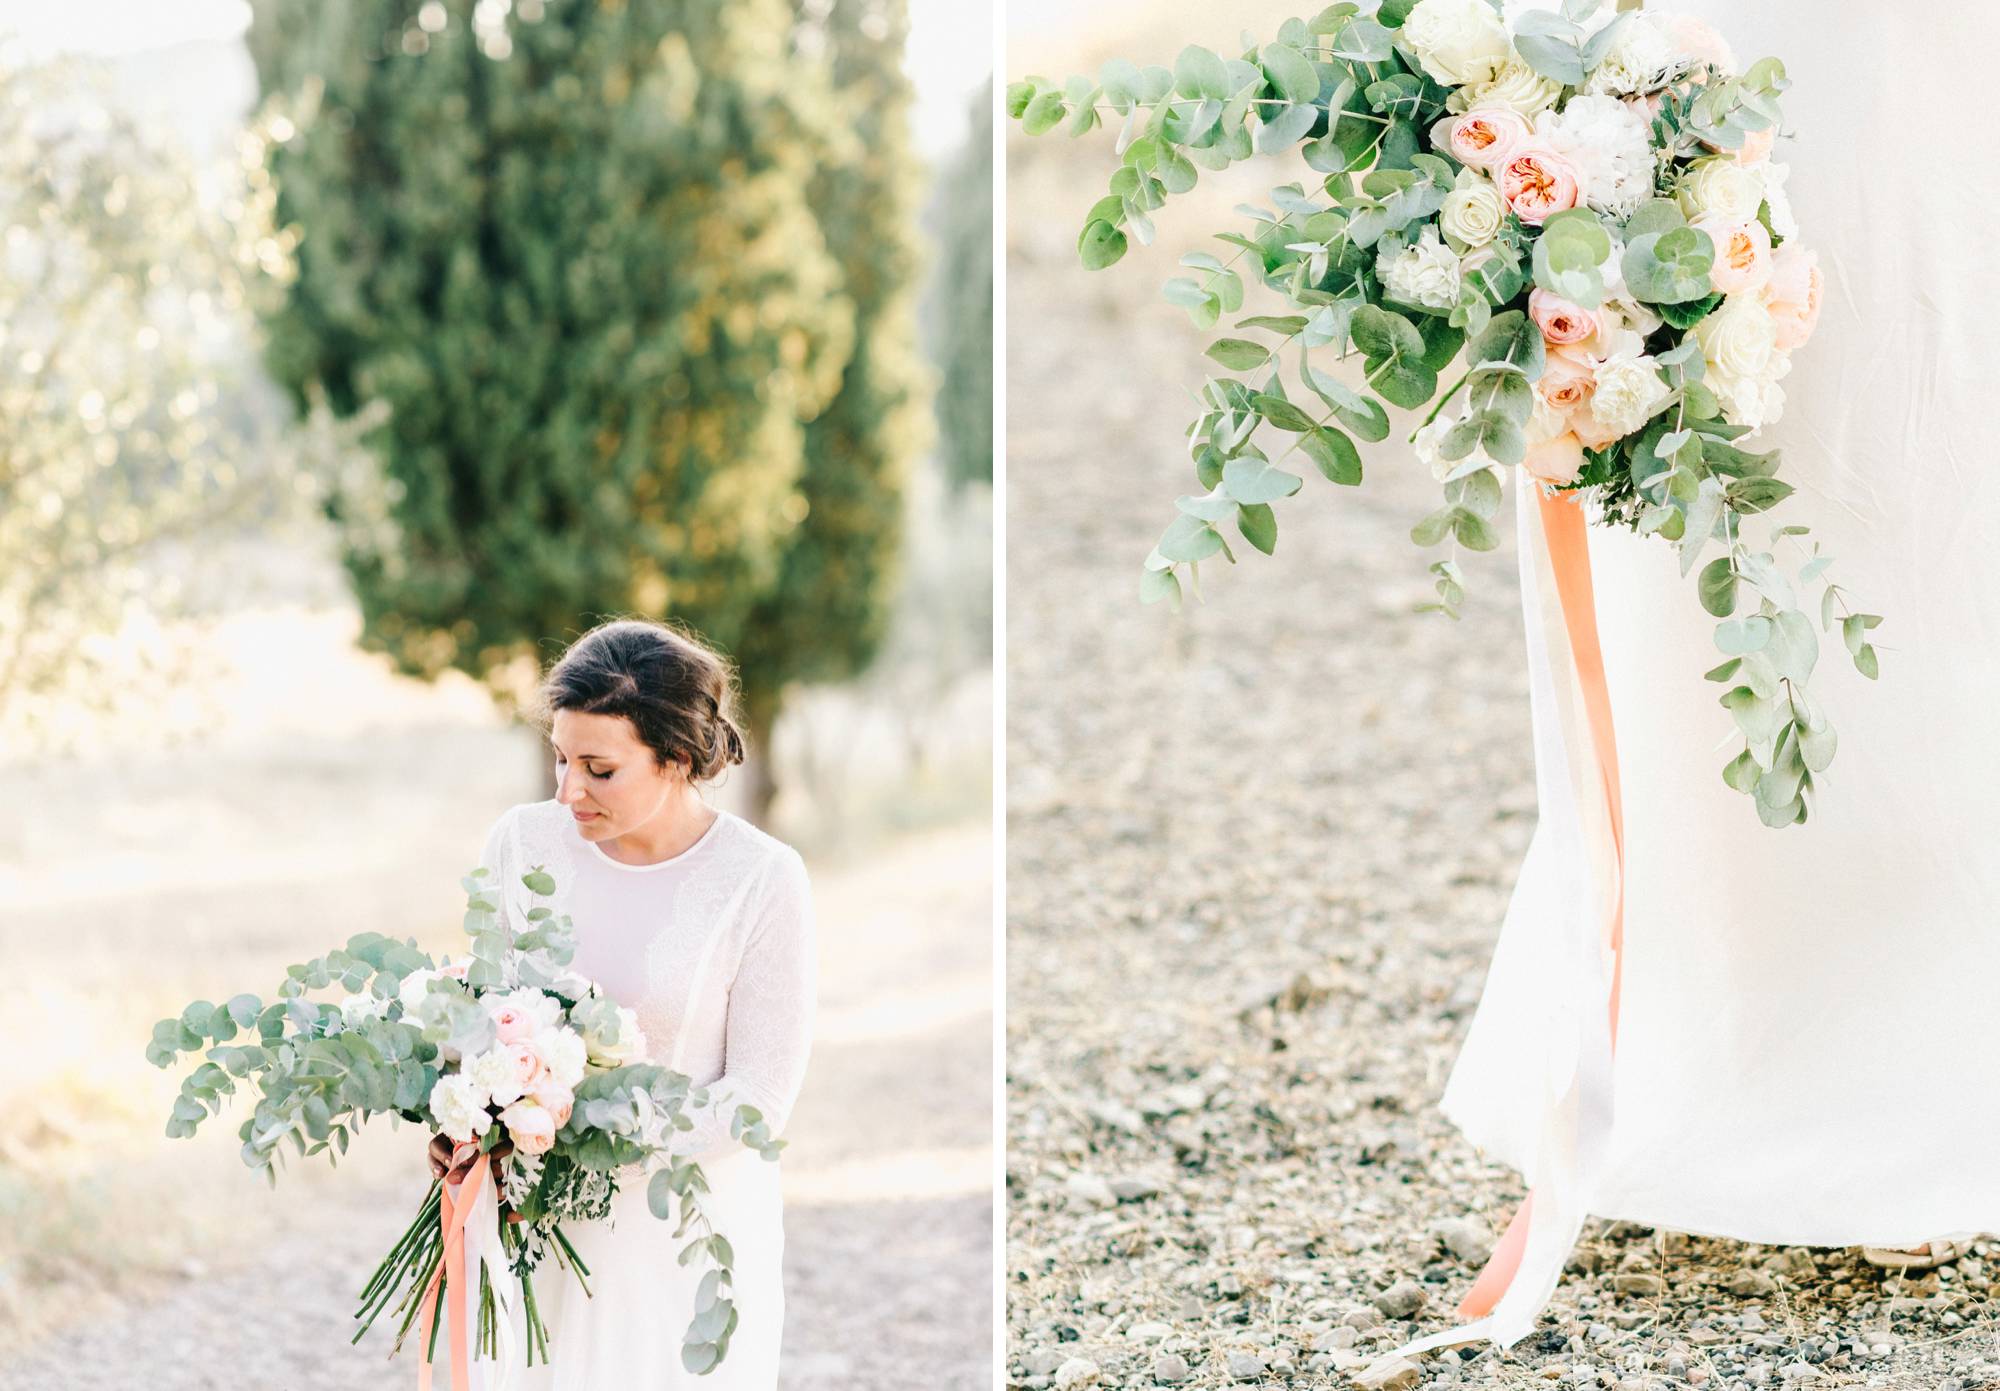 Fine art wedding photographer Destination Wedding Tuscany Italy - Bridal bouquet